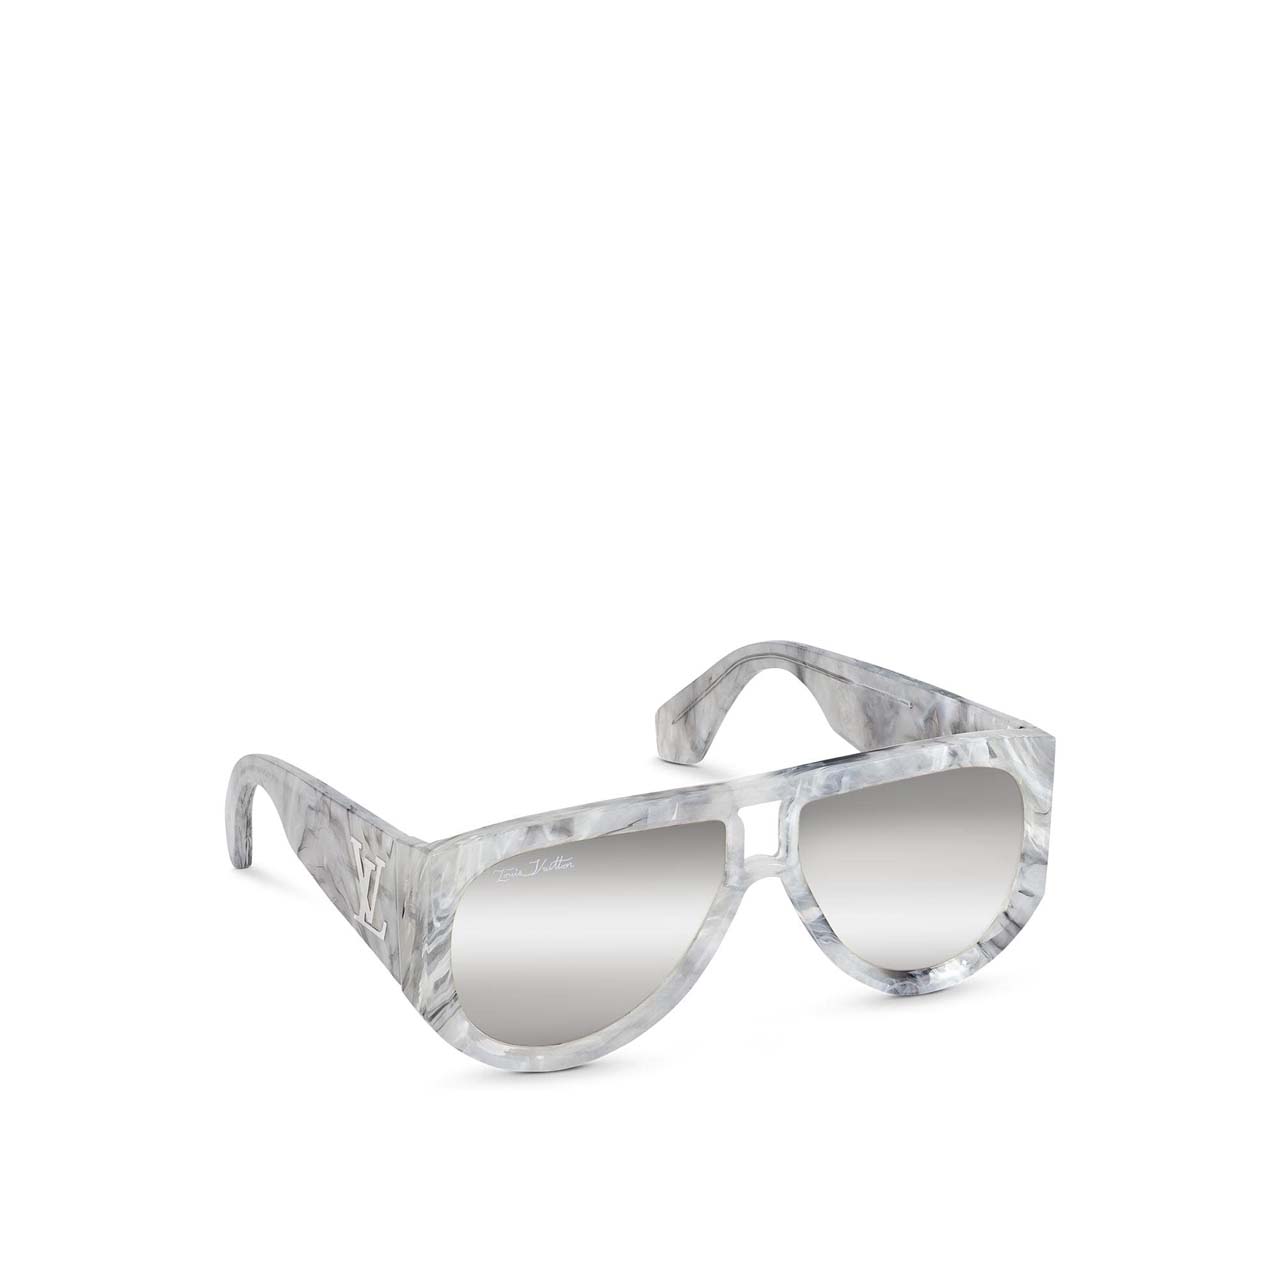 Louis Vuitton Selby Sunglasses $530